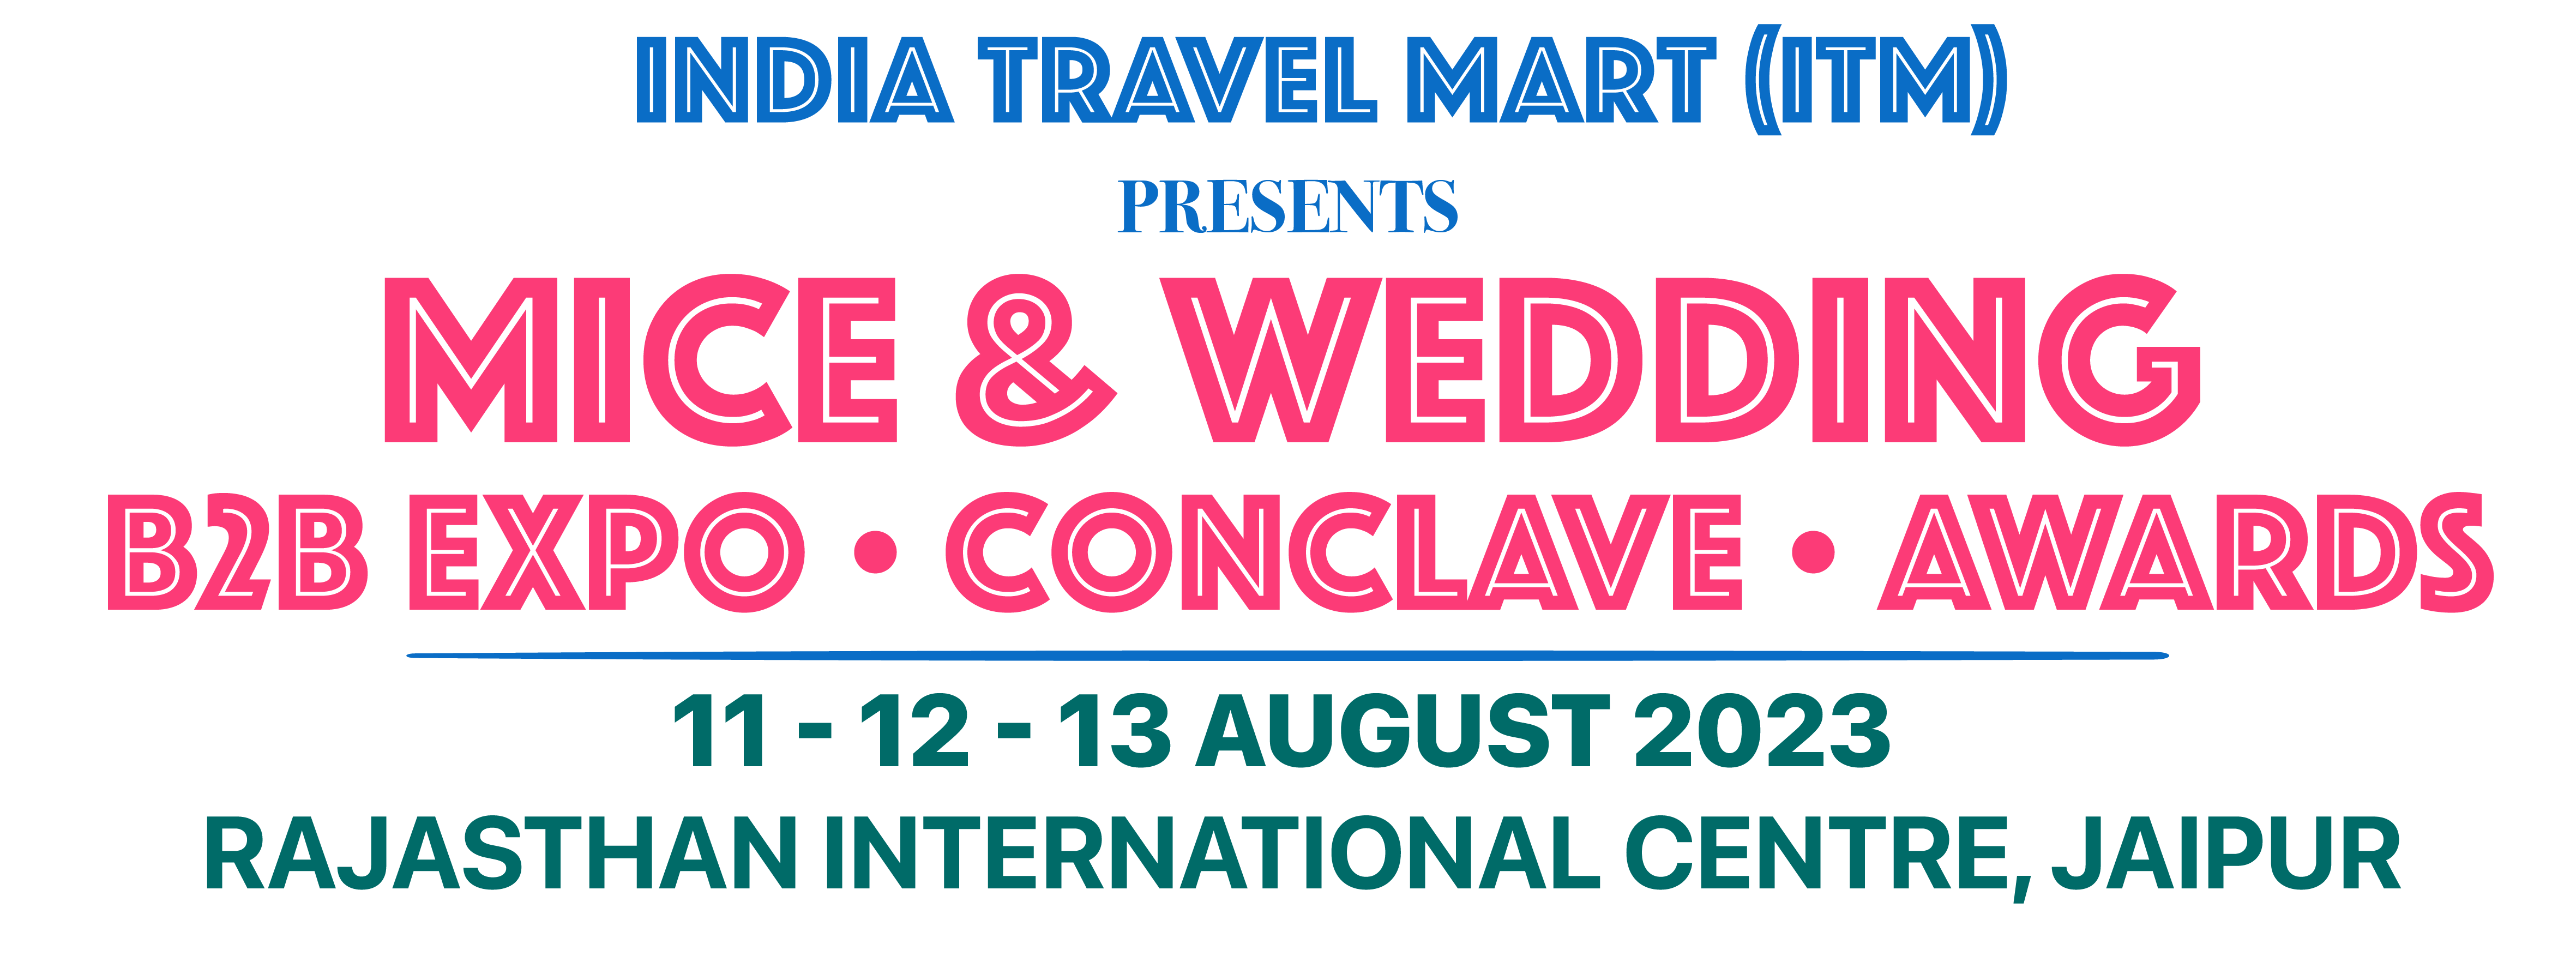 India travel mart jaipur - mice and wedding